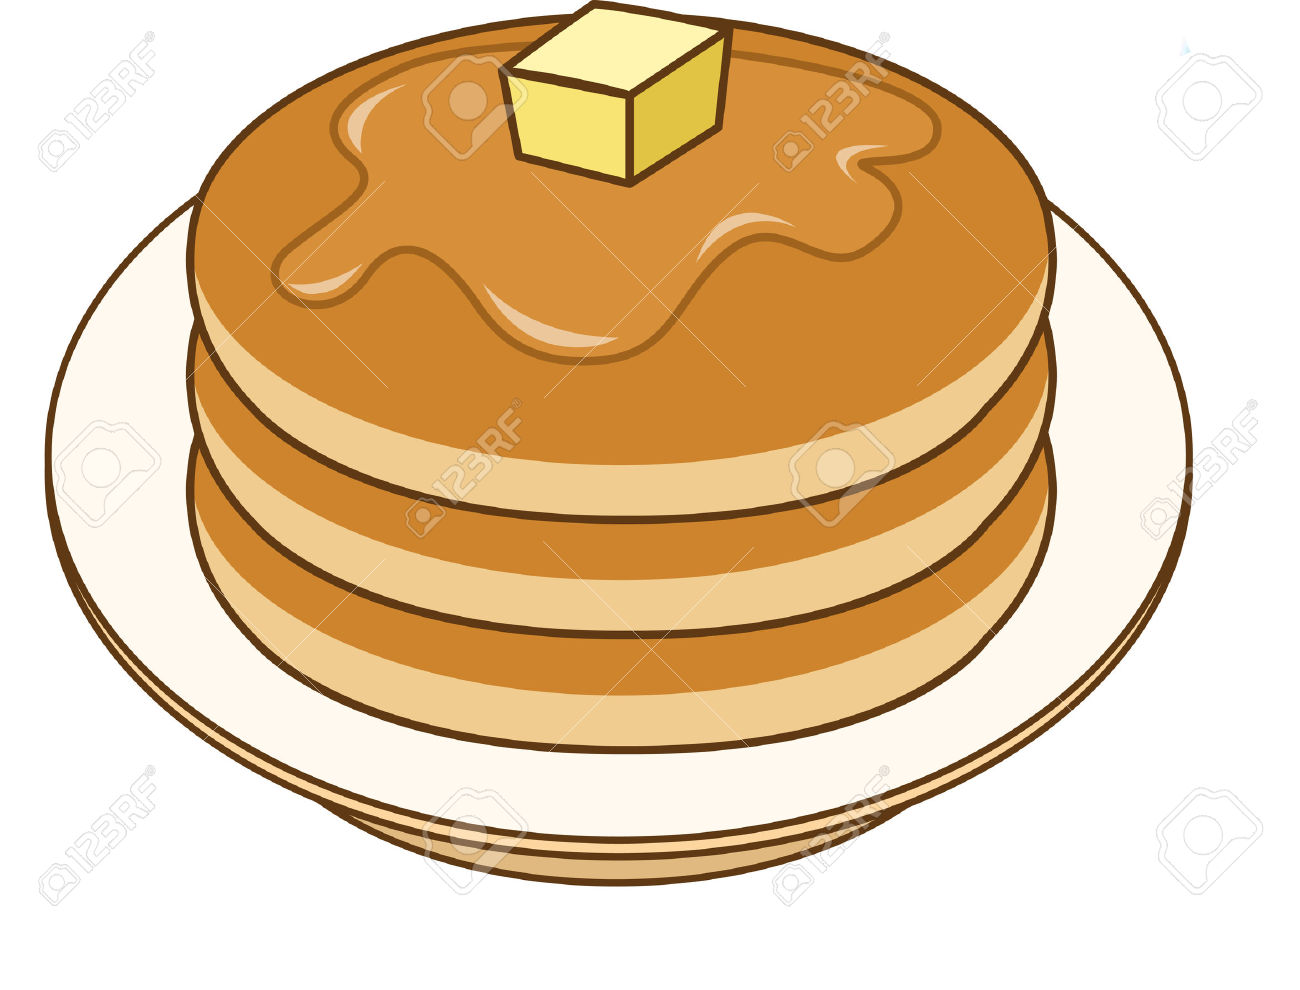 Pancake drawing at getdrawings. Pancakes clipart